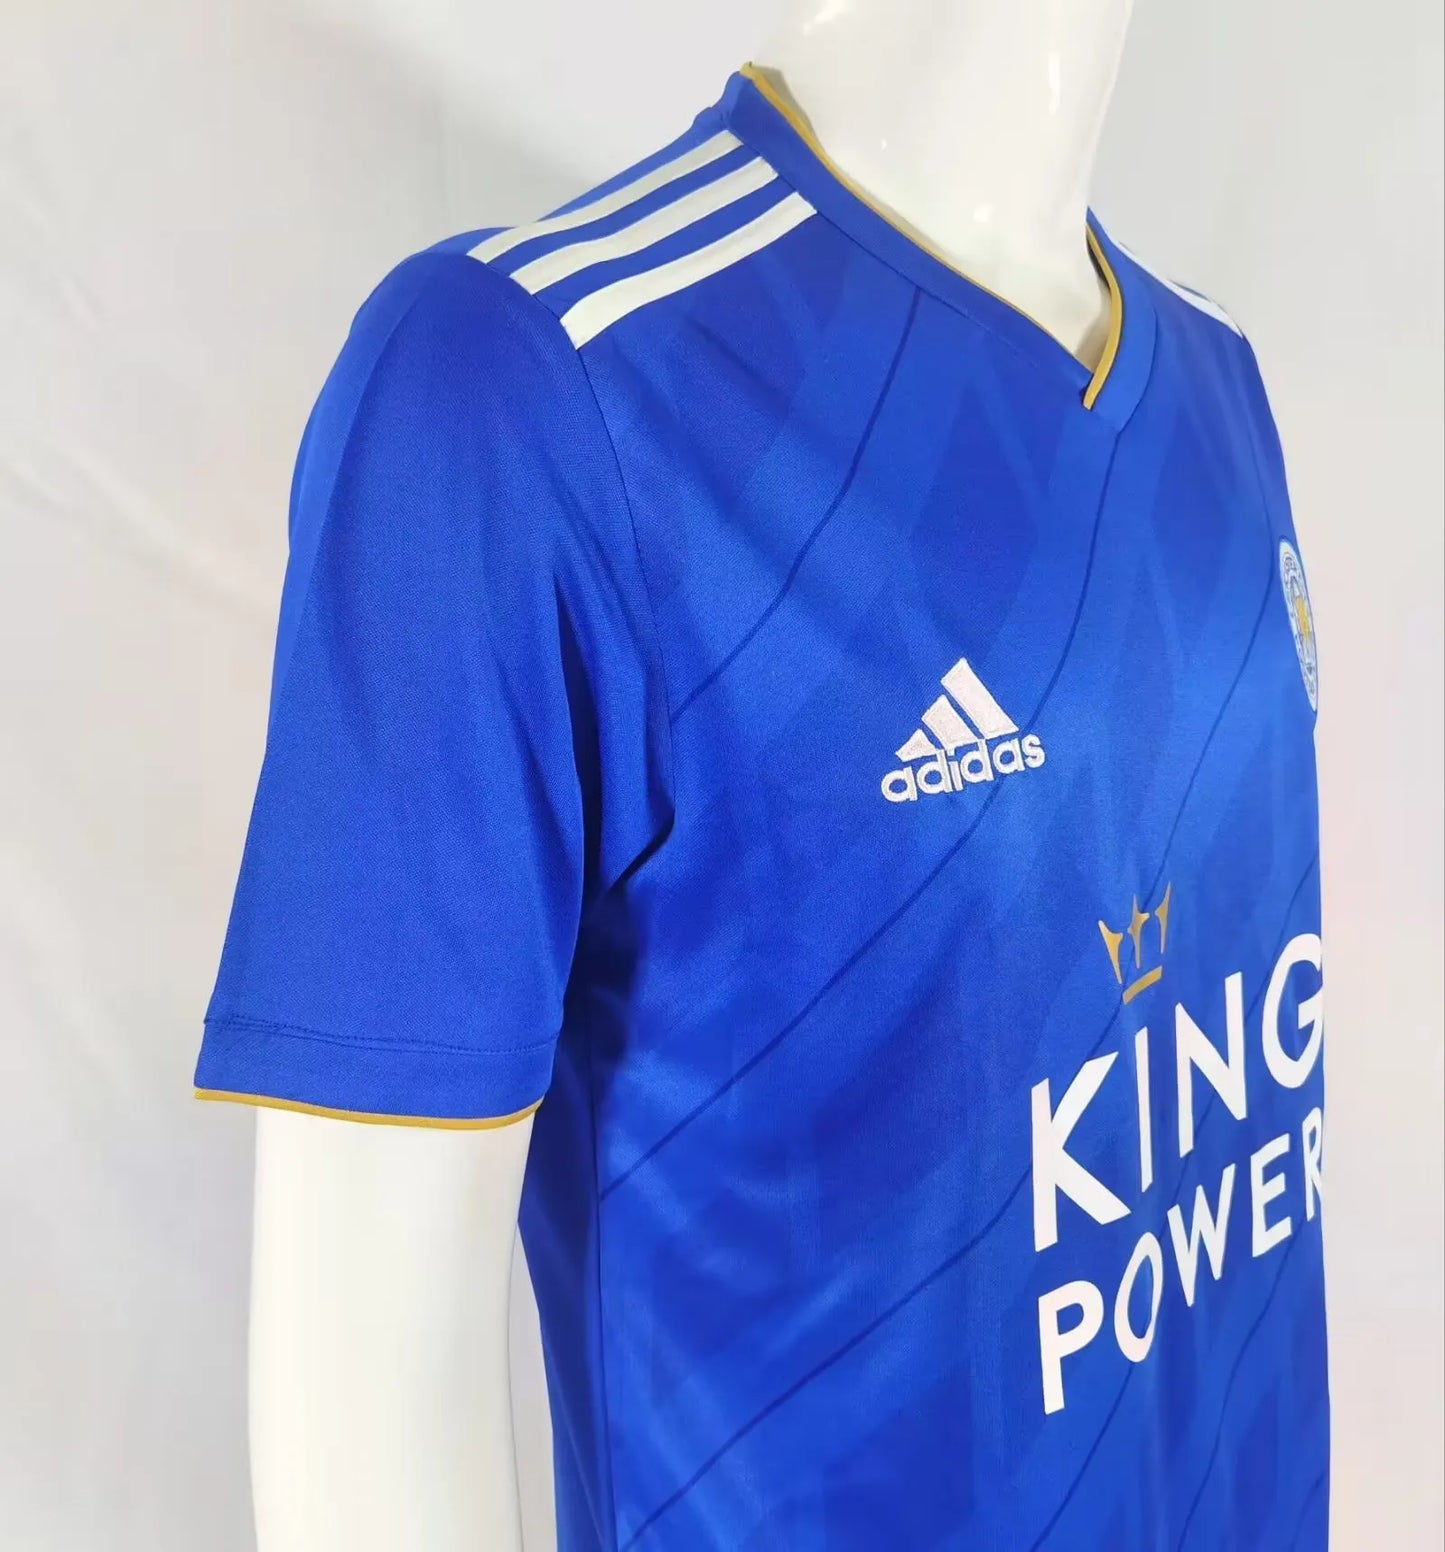 Leicester City 18-19 Home Shirt